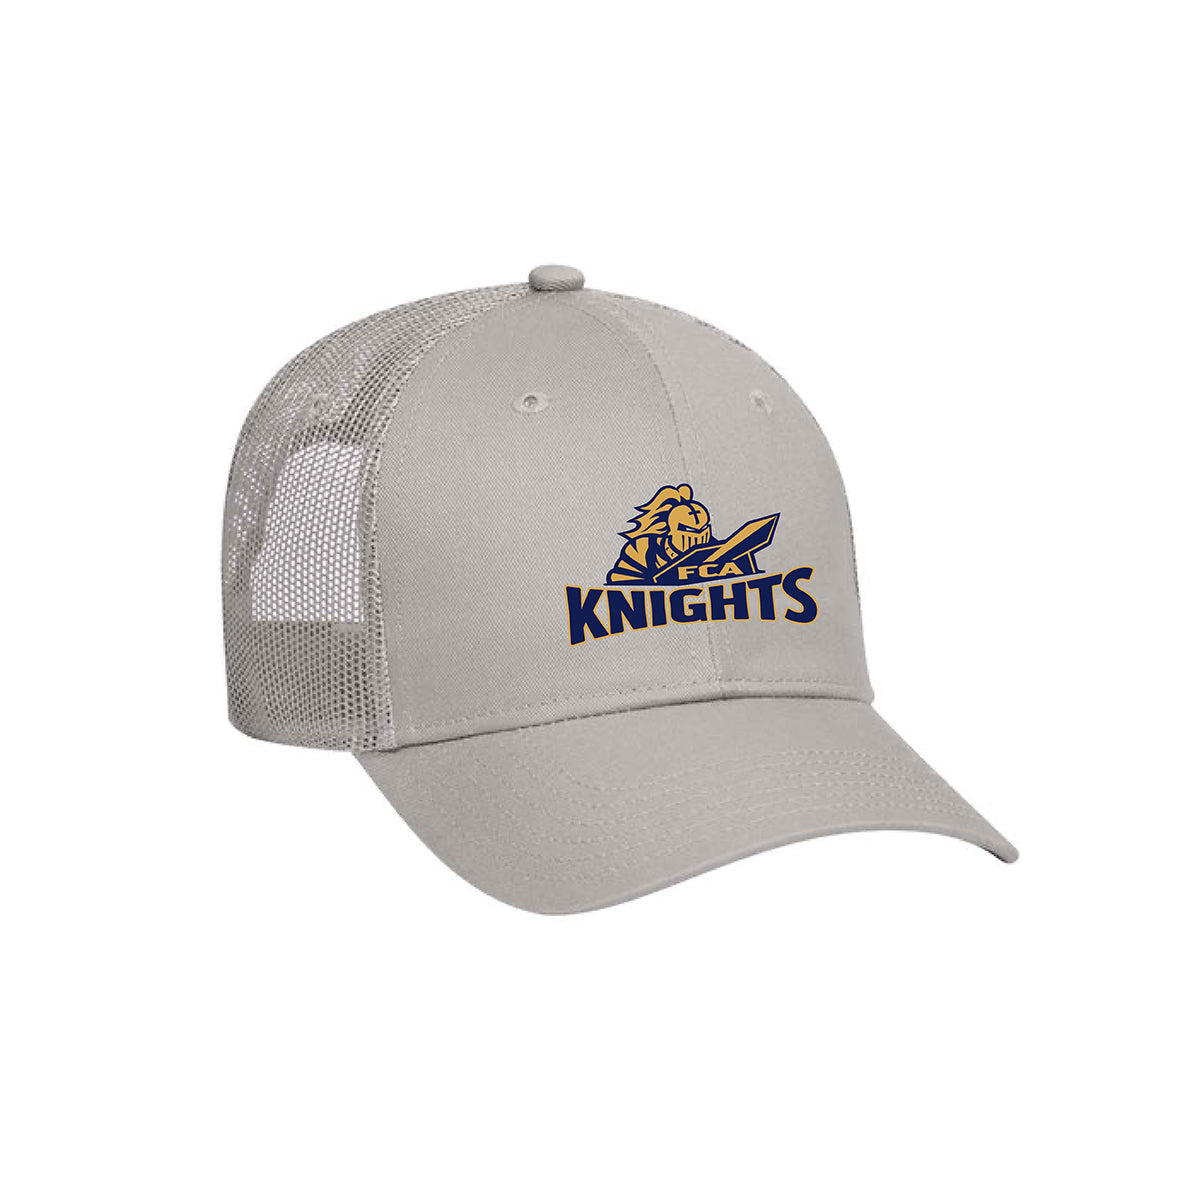 FCA Knights Low-Profile Trucker Hat in Navy